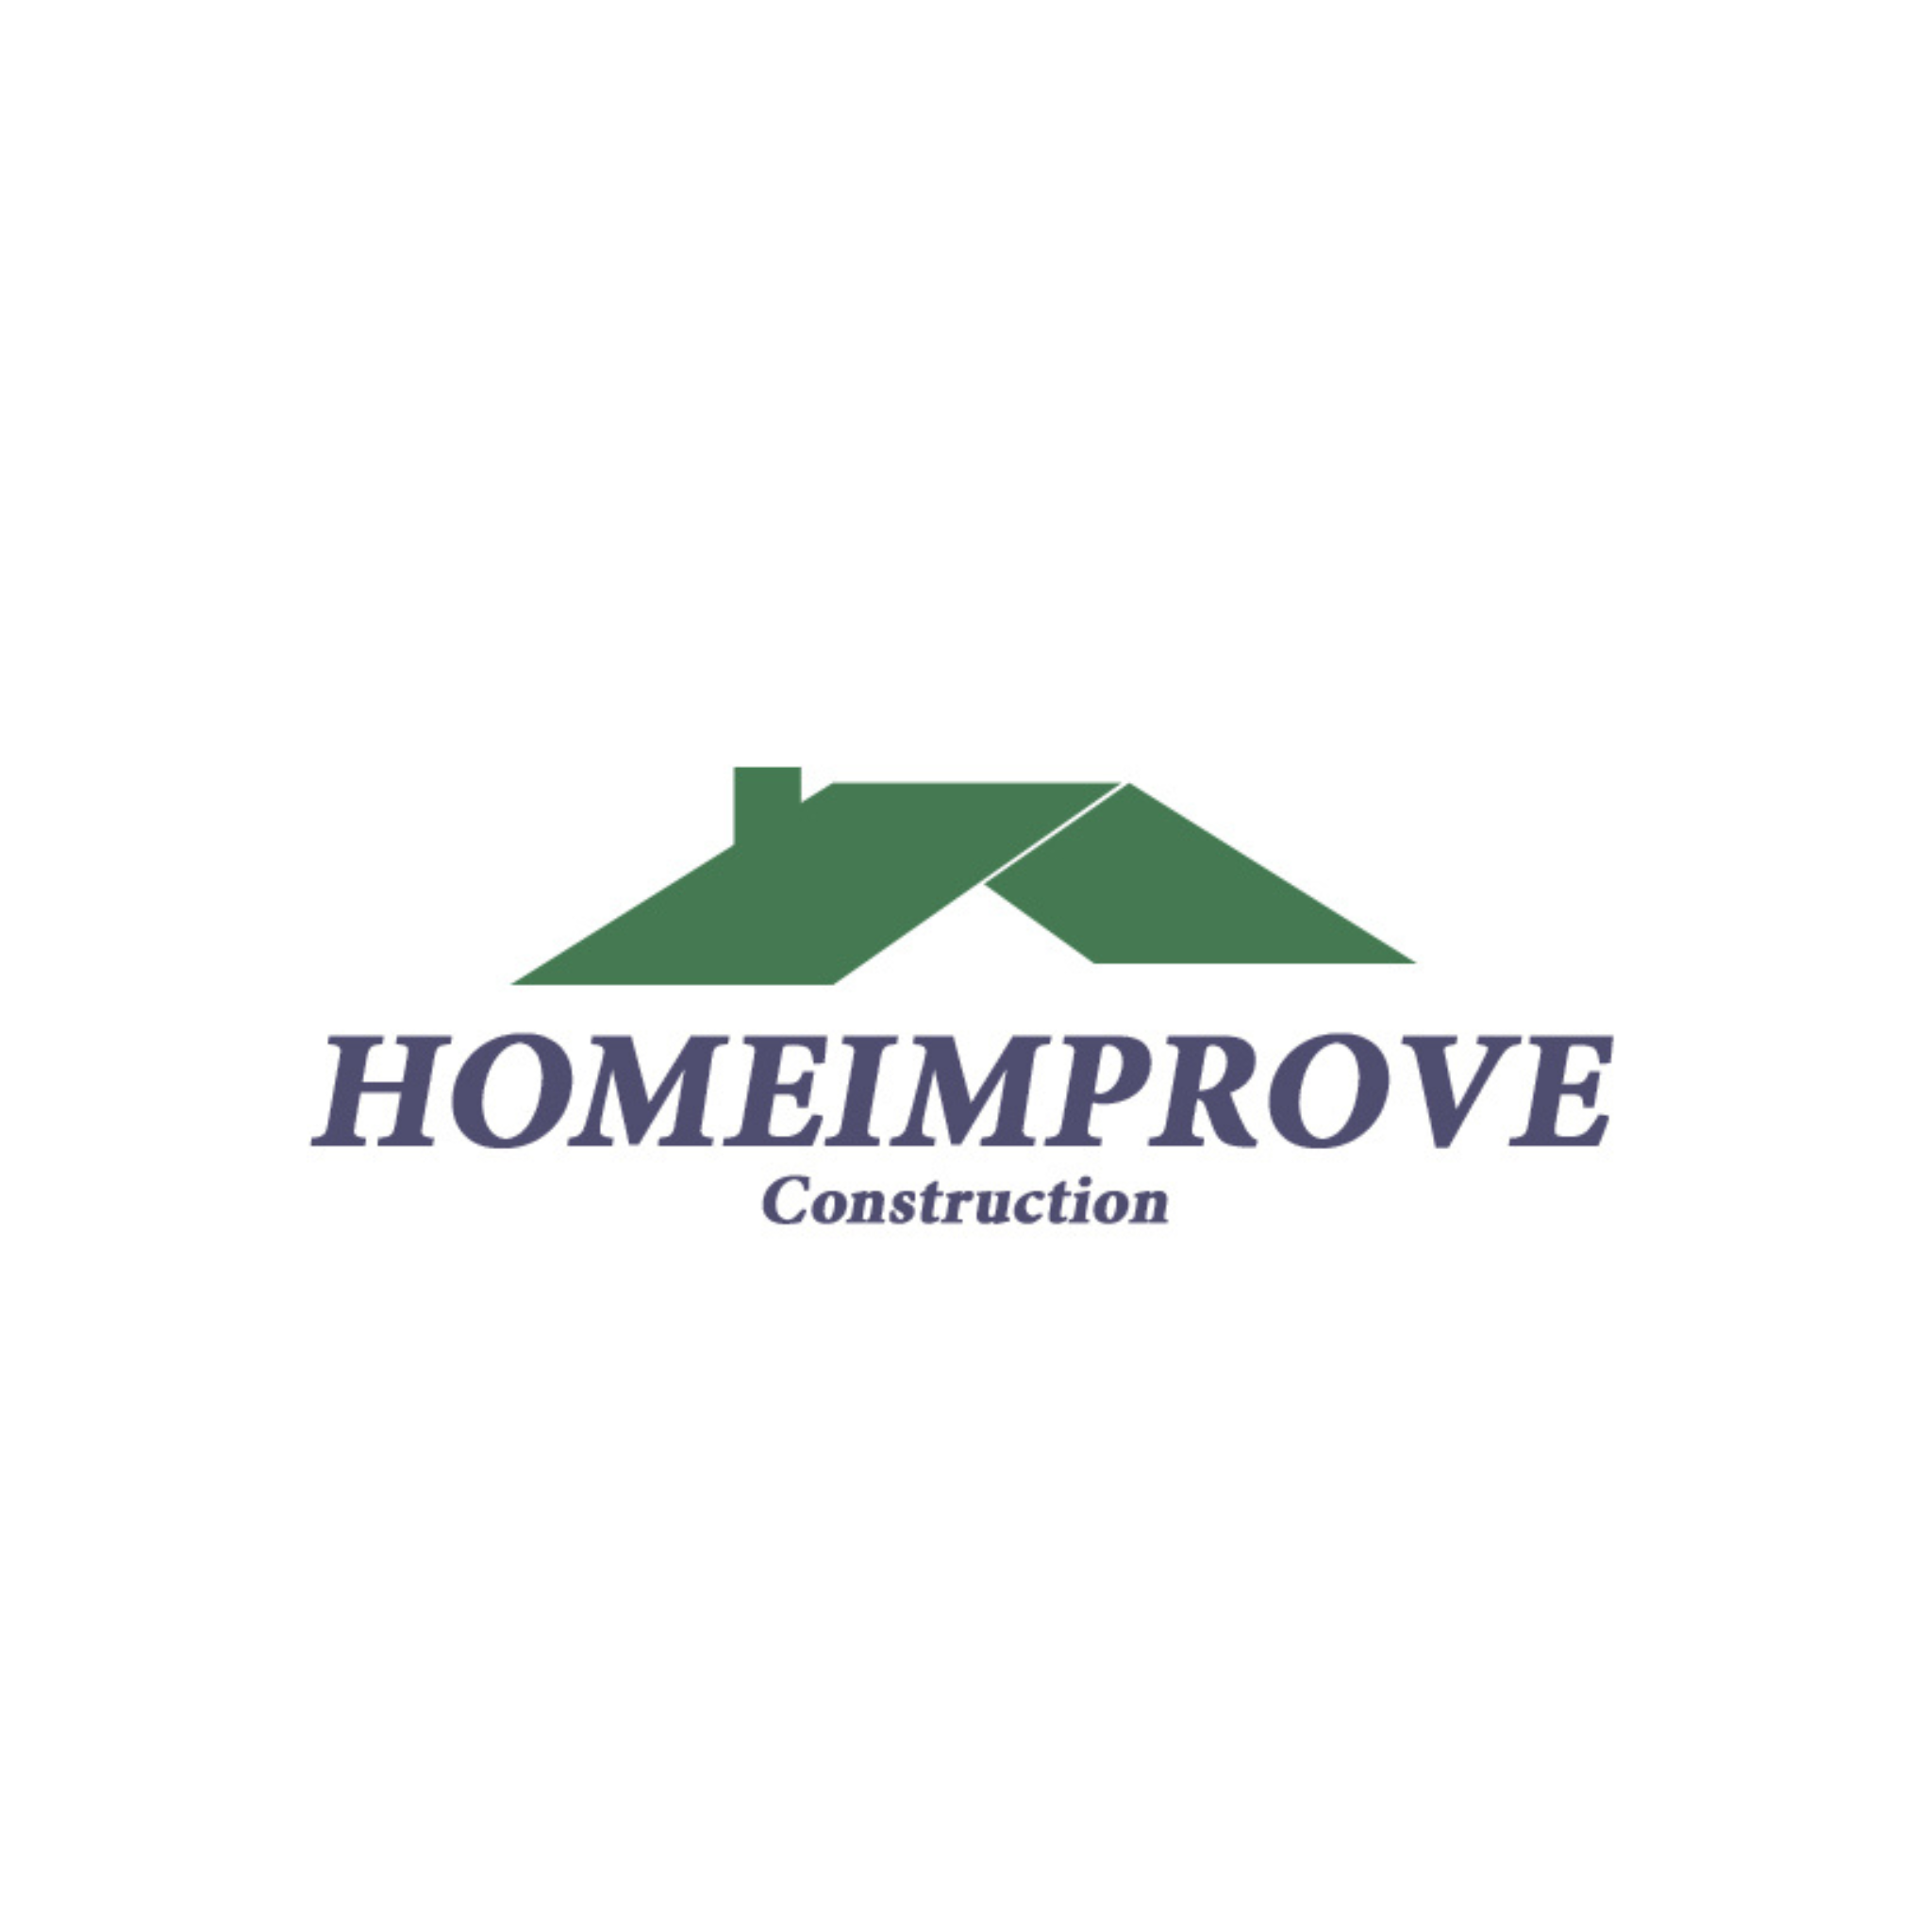 Homeimprove Construction, Inc. Logo